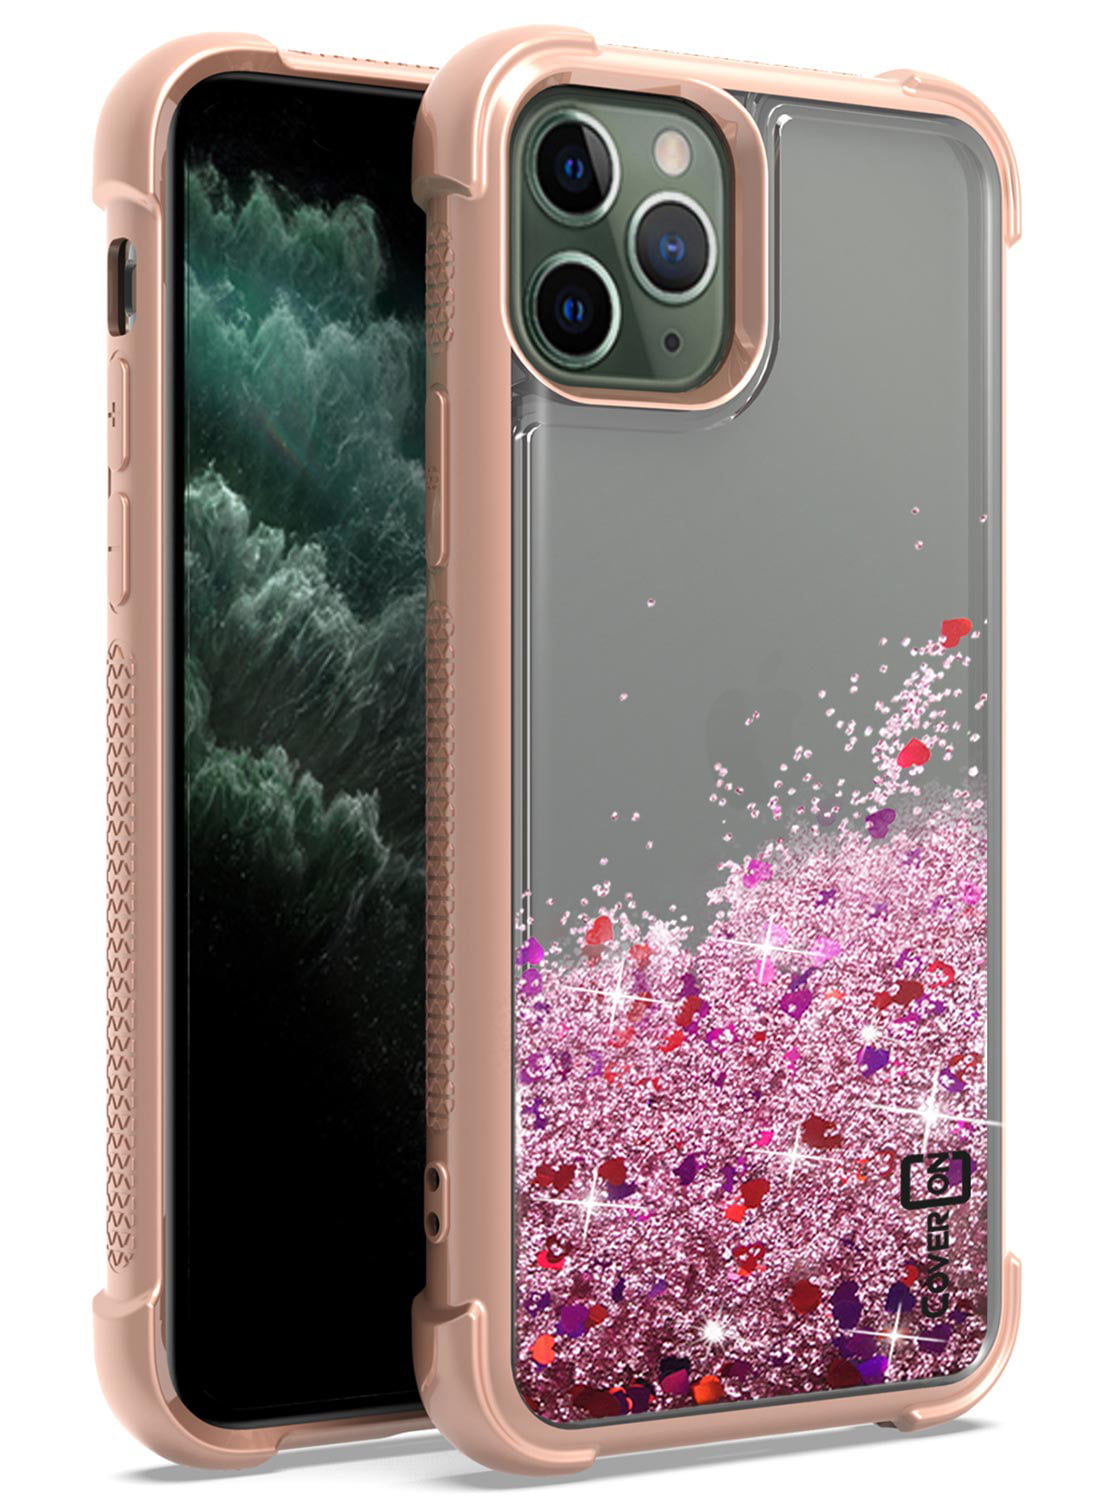 Coveron Apple Iphone 11 Pro Max Case Liquid Glitter Bling Clear Tpu